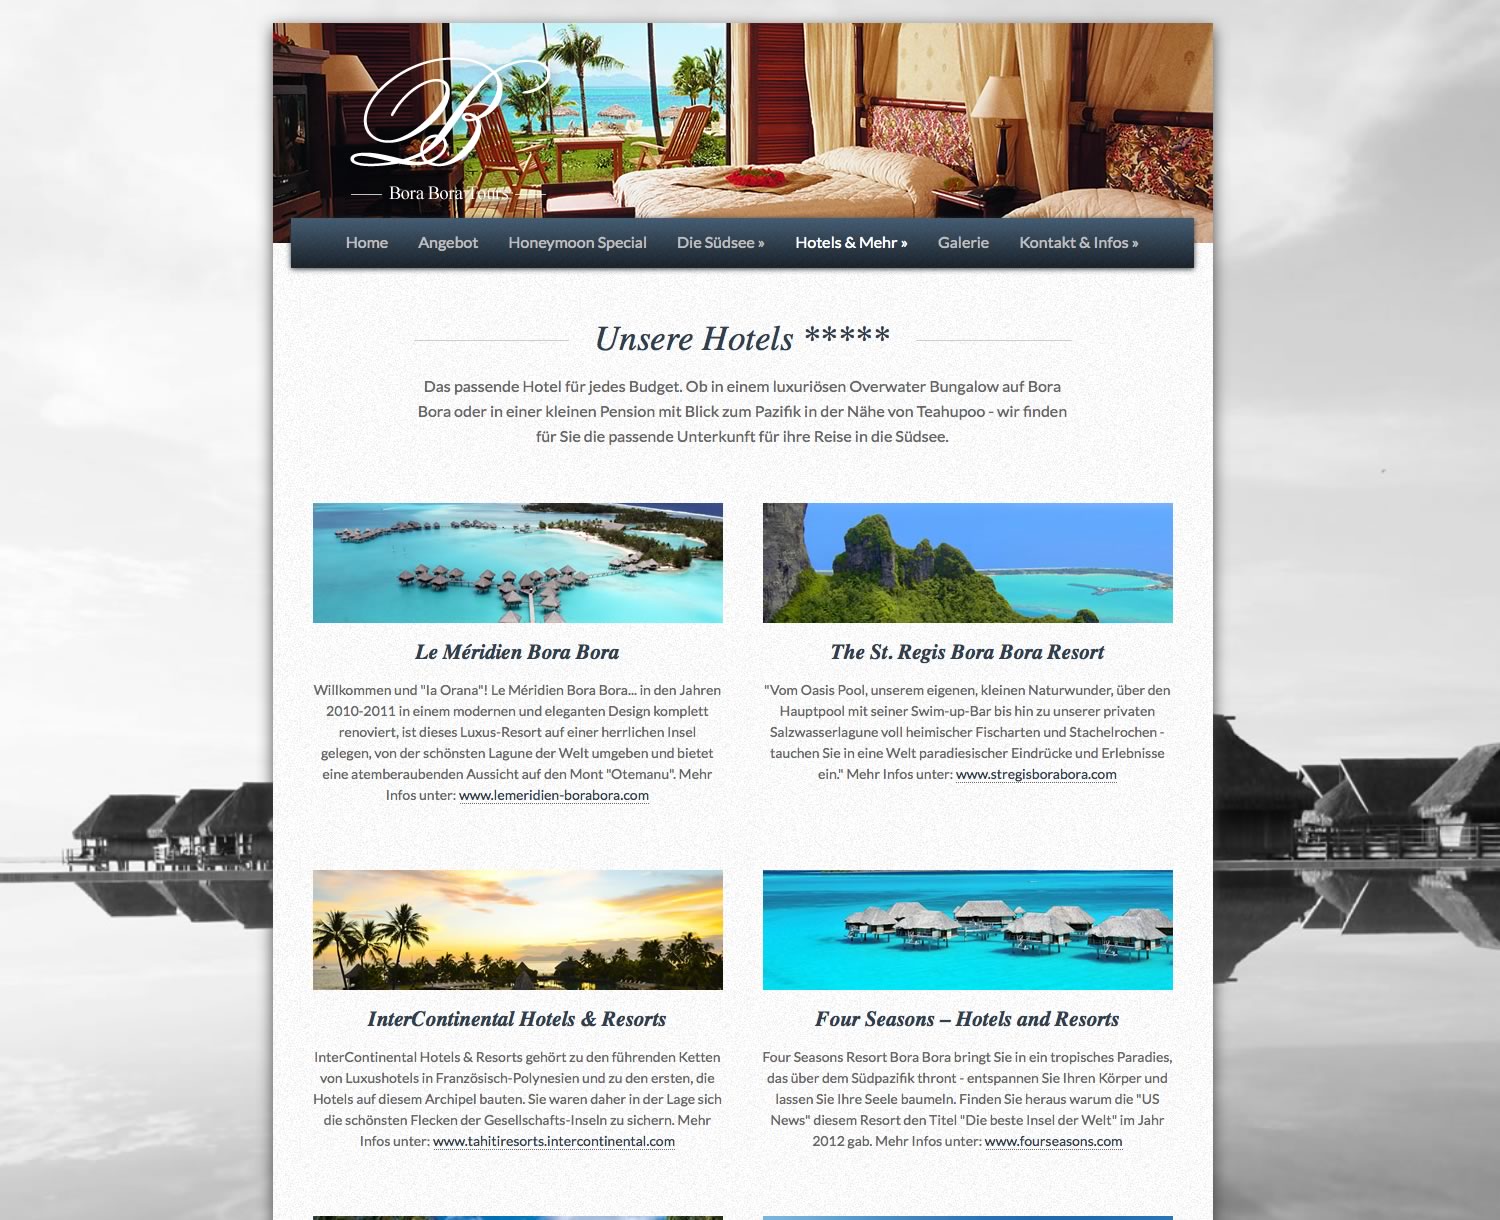 Bora Bora, Tours, Travel, Vacation, Holidays, Flights, HTML 5, jQuery, Website, Homepage, Programming, Development, Web Design, Web, Website, Company, Weblooks